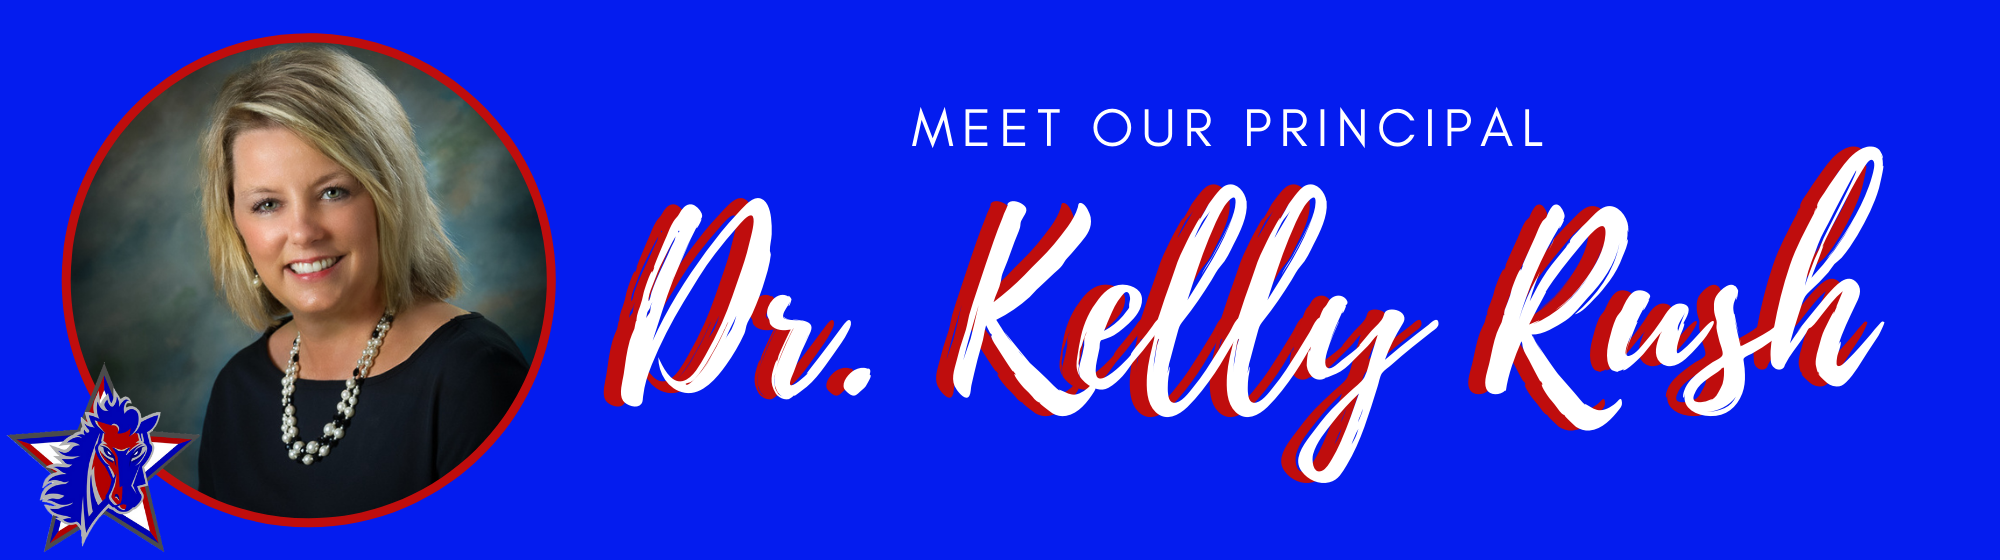 Meet Our Principal, Dr. Kelly Rush